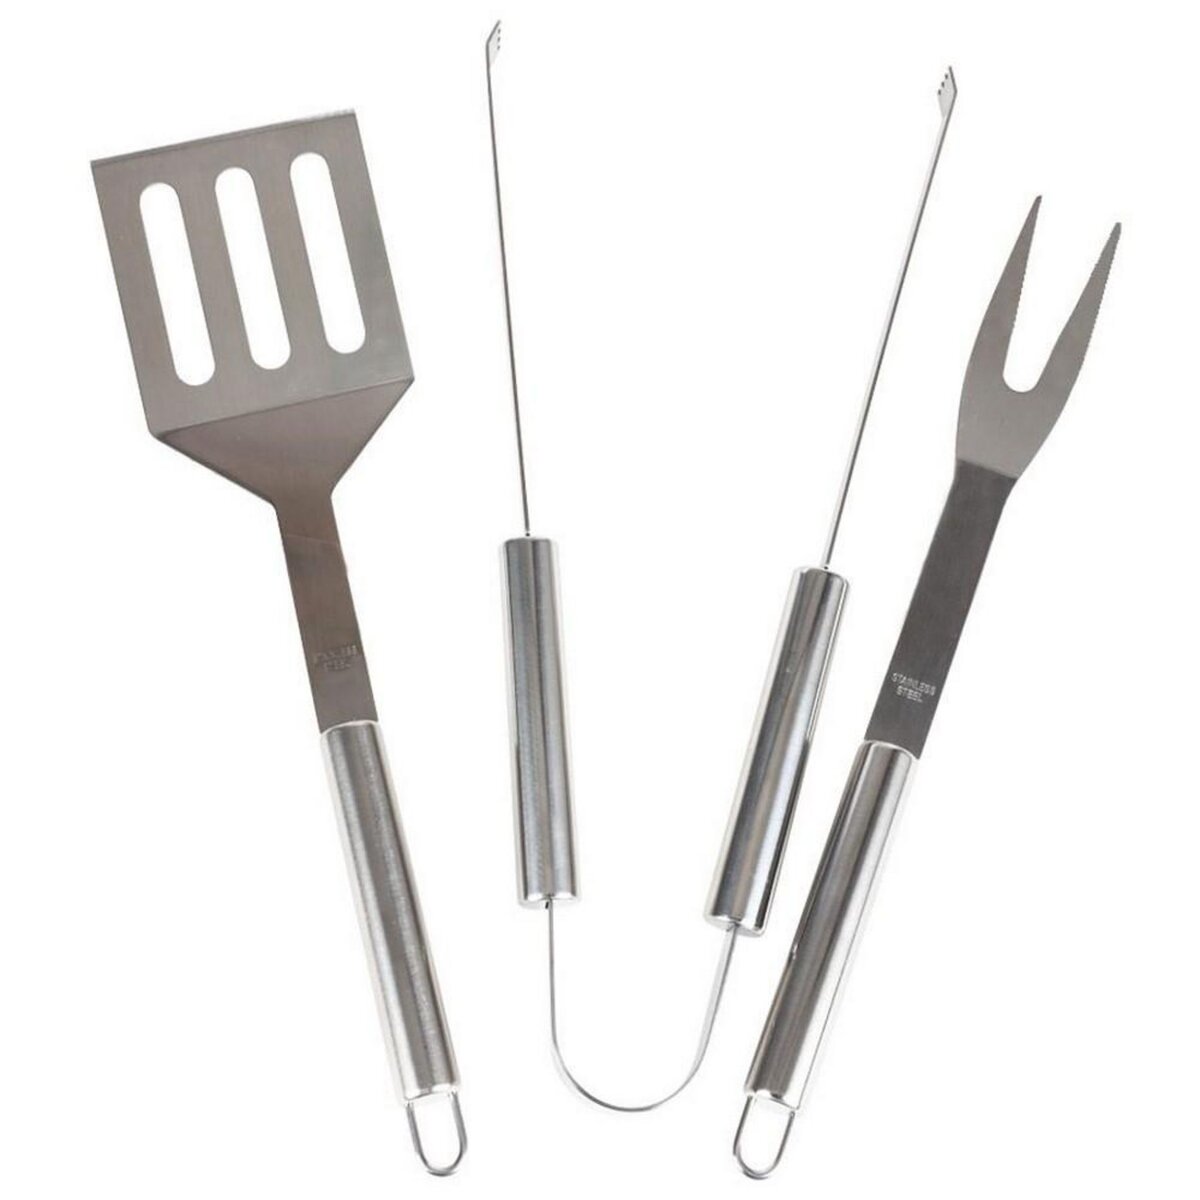 Kit complet barbecue plancha pince fourchette spatule Bois Inox pas cher 